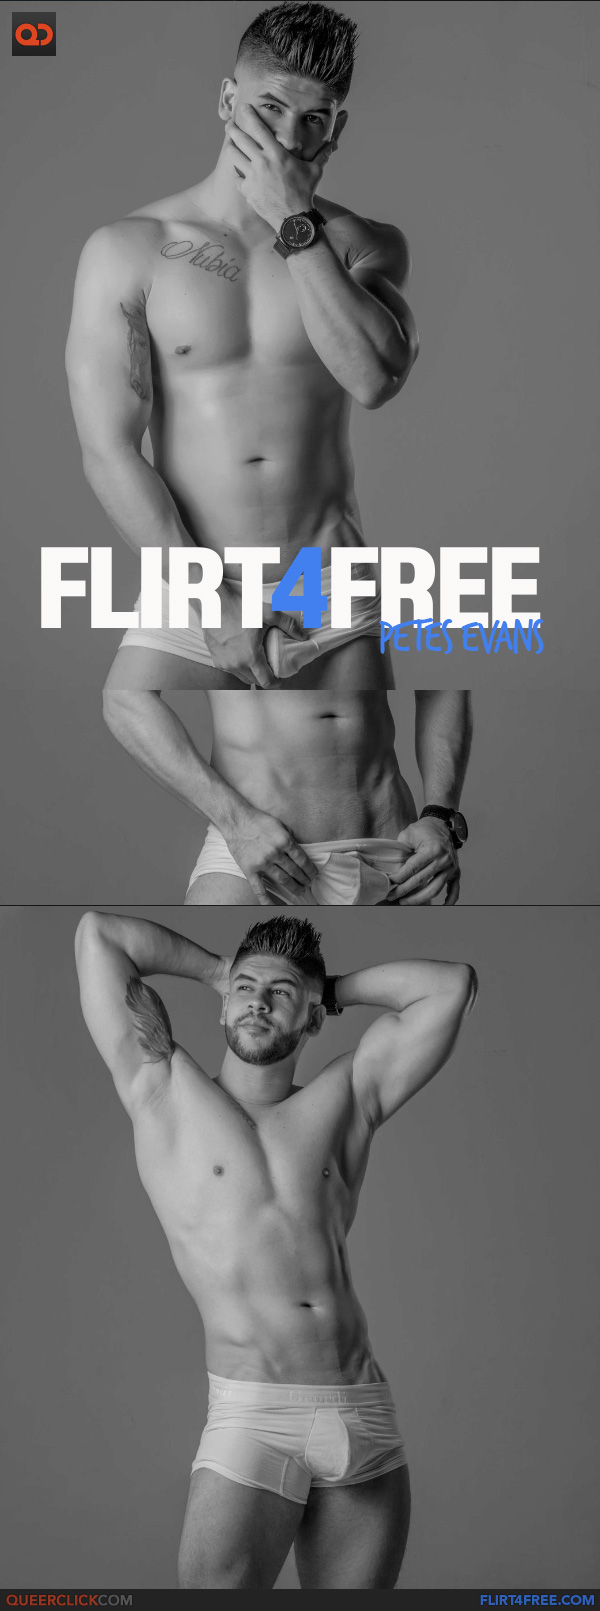 Flirt4Free: Petes Evans